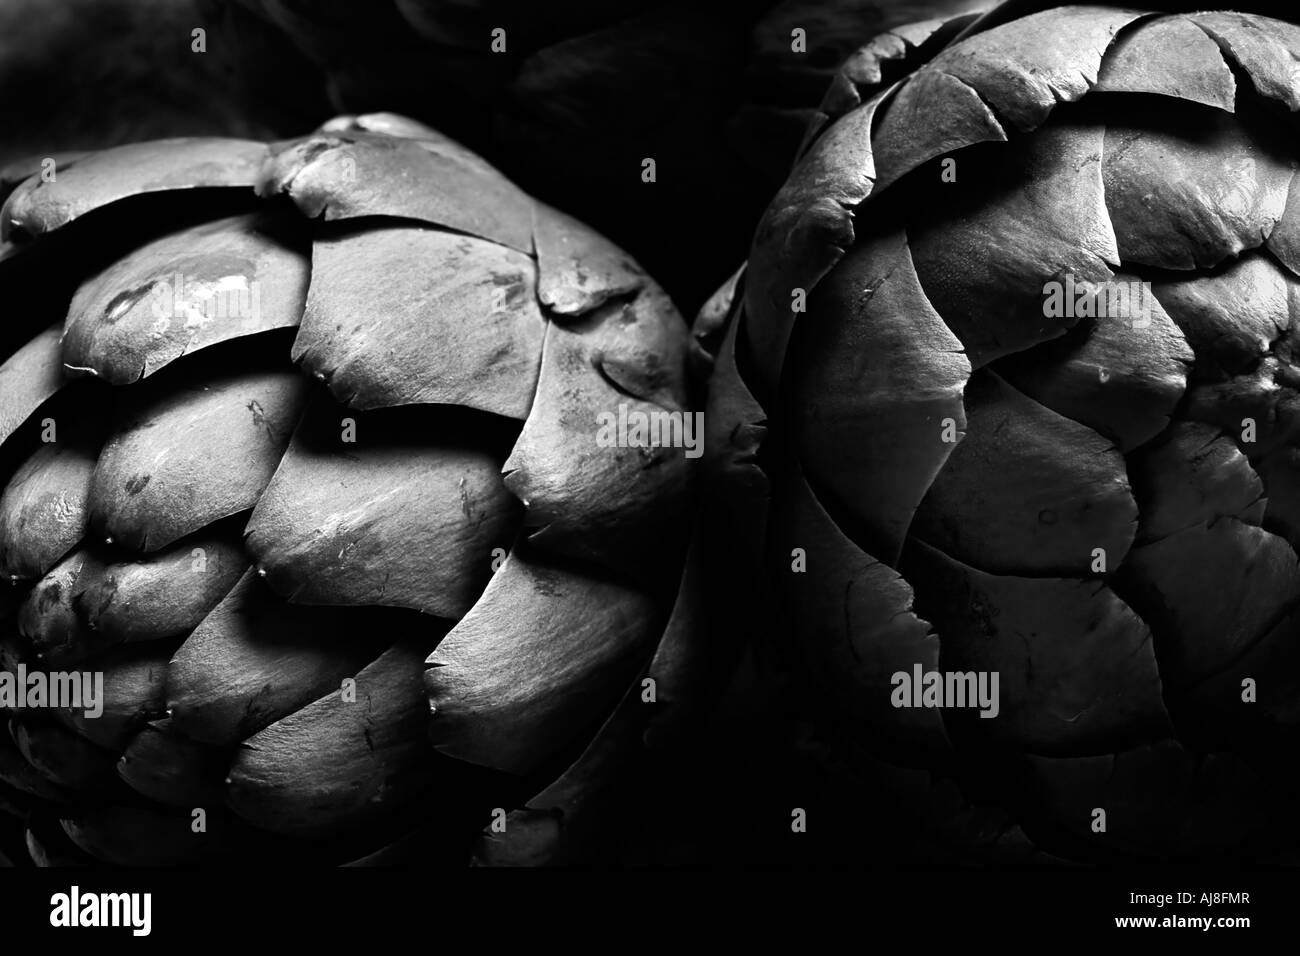 Stock photo of two globe artichokes shot in black and white Stock Photo